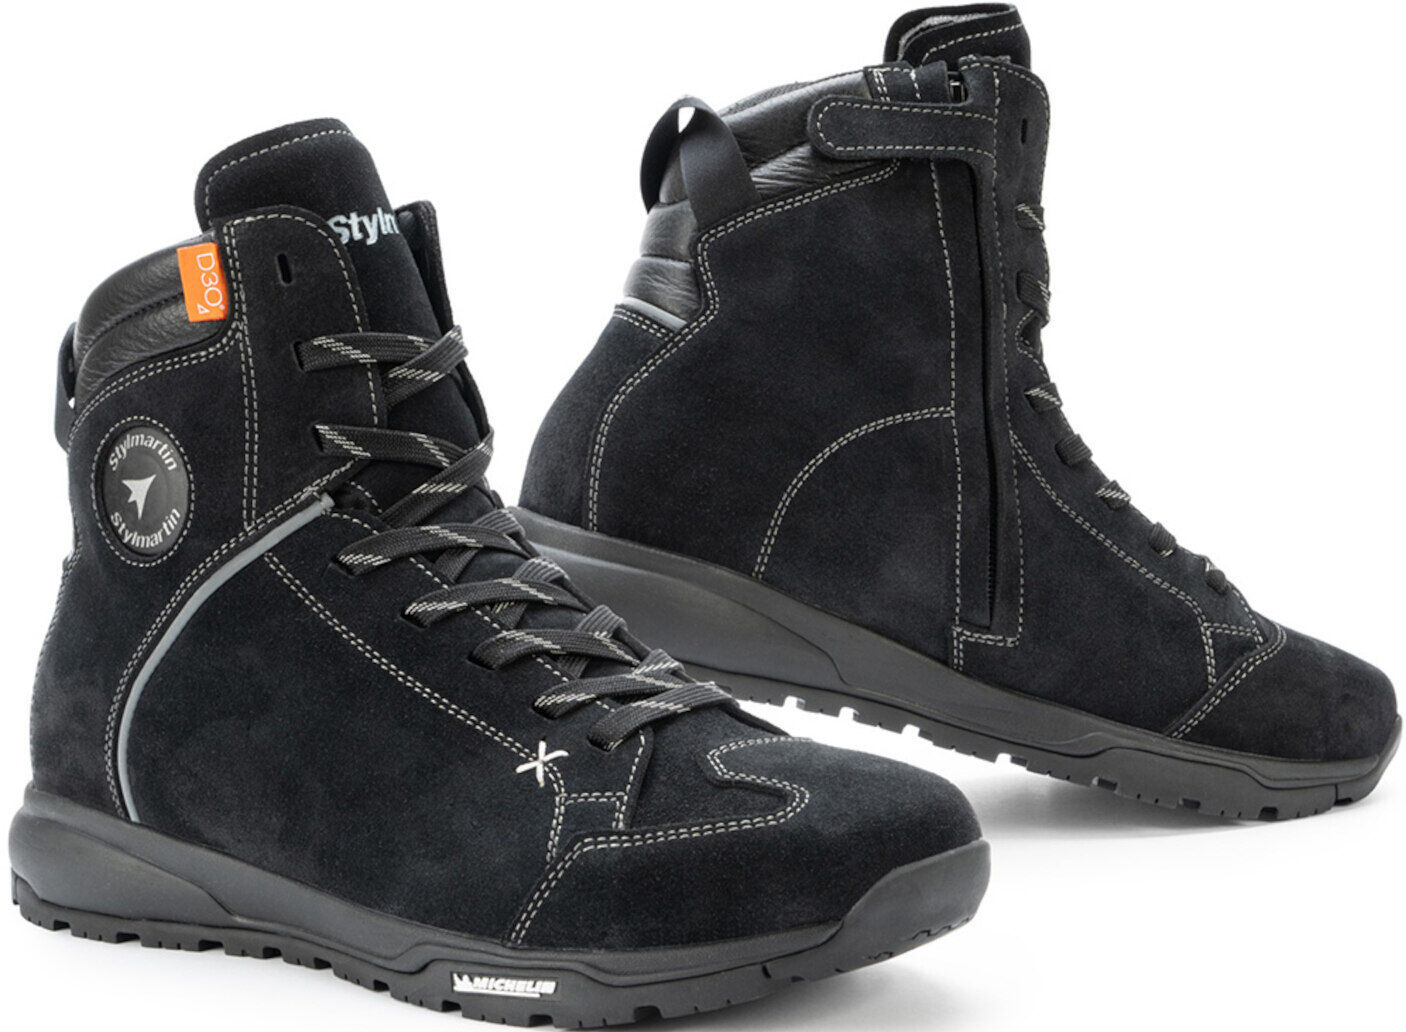 Stylmartin Zed Zapatos de moto impermeables - Negro (43)